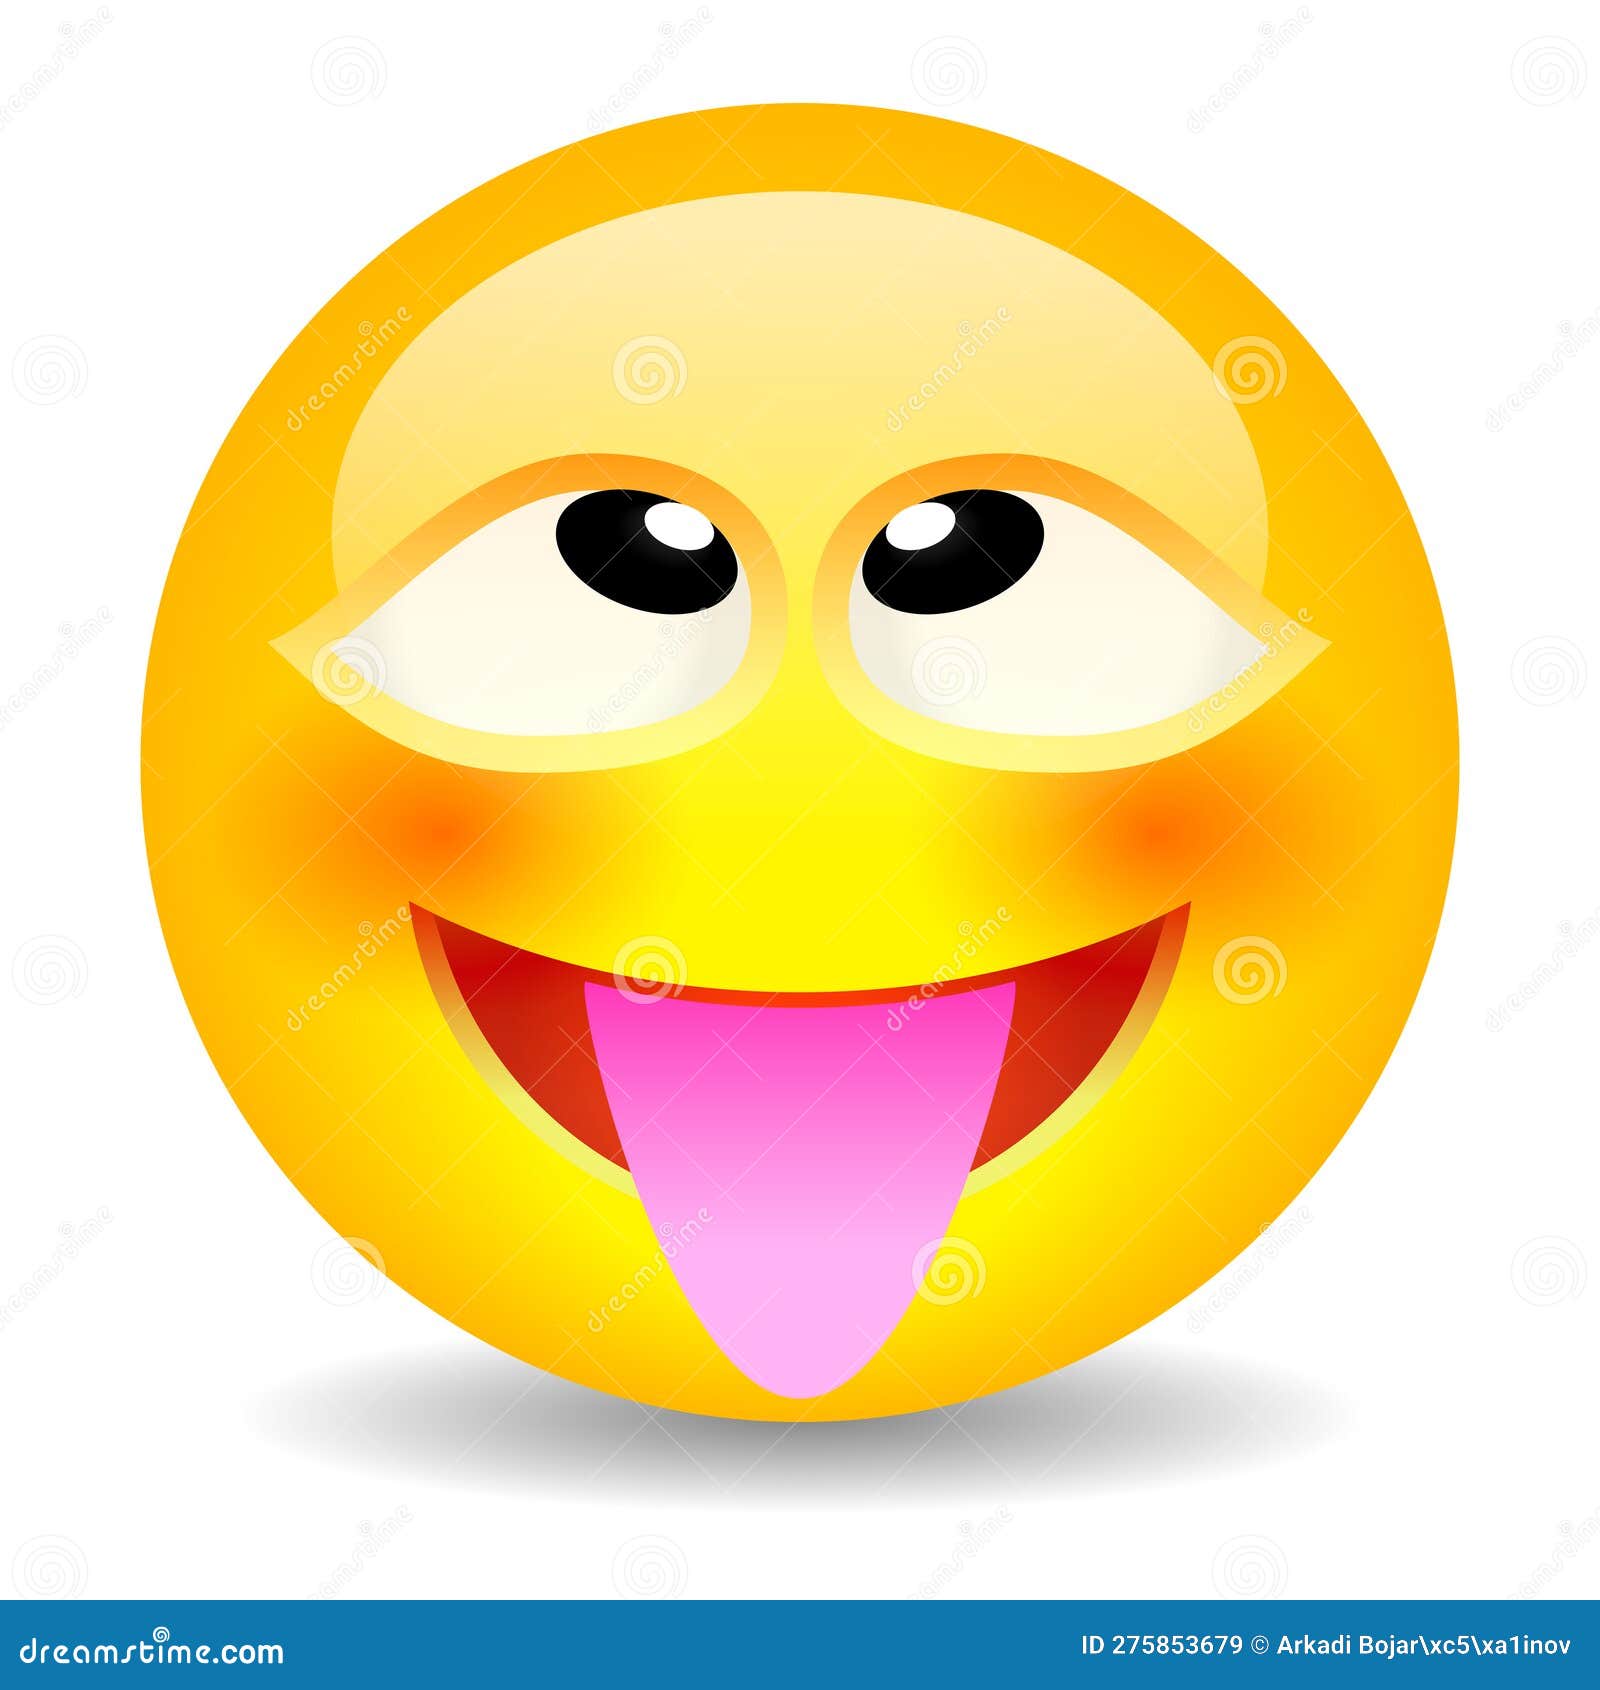 Scared Funny Face Cartoon Emoji - Funny Face - Sticker